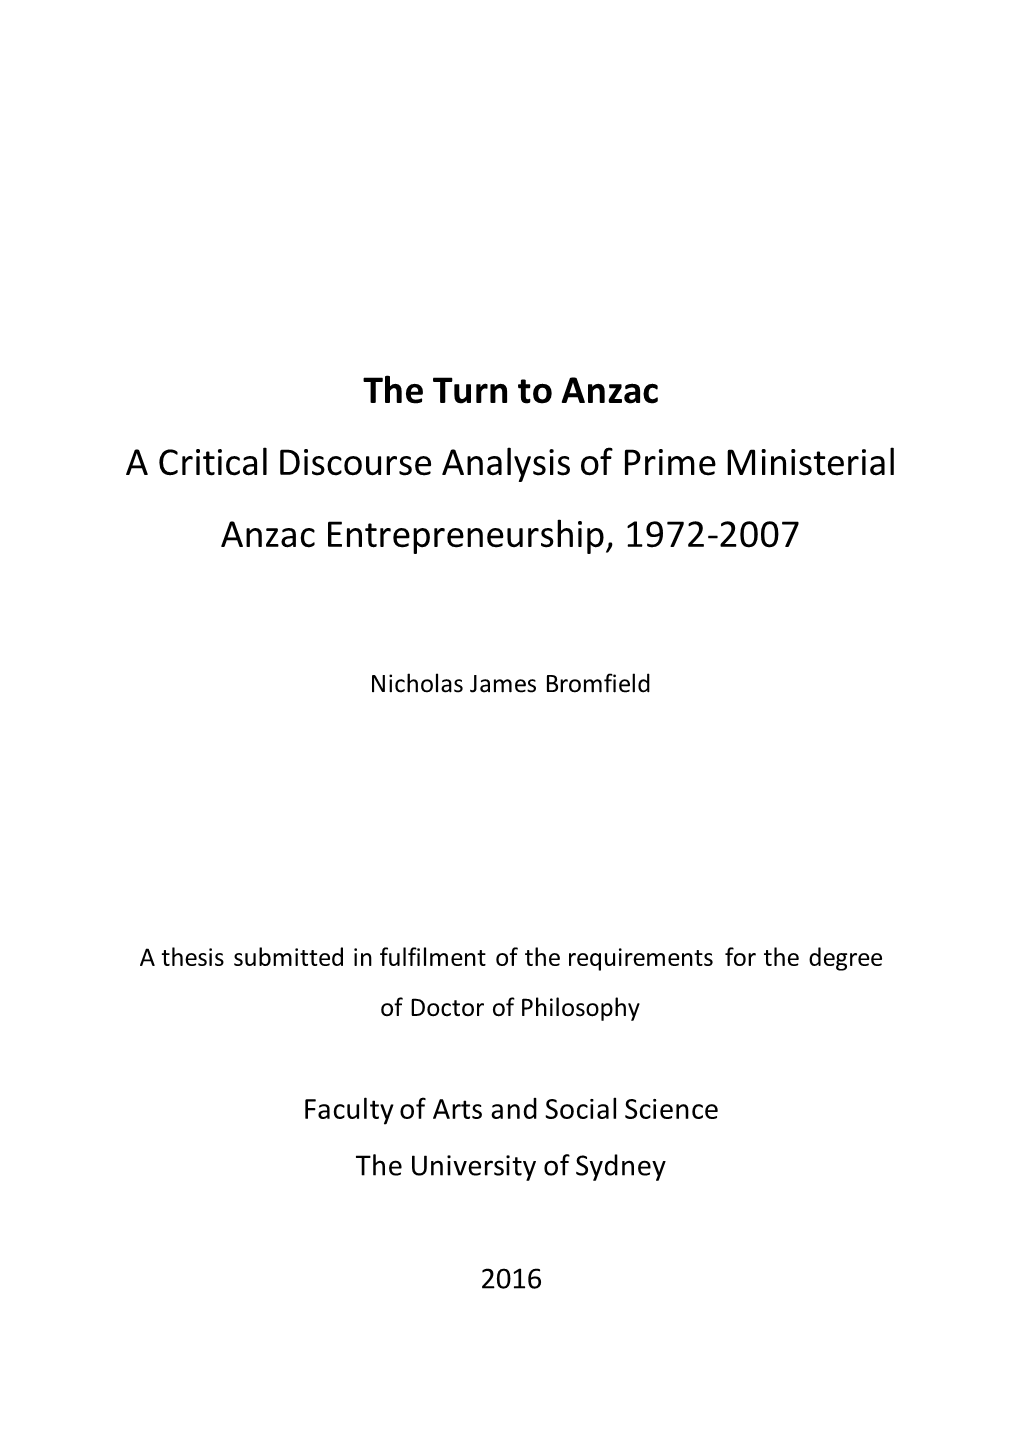 The Turn to Anzac a Critical Discourse Analysis of Prime Ministerial Anzac Entrepreneurship, 1972-2007